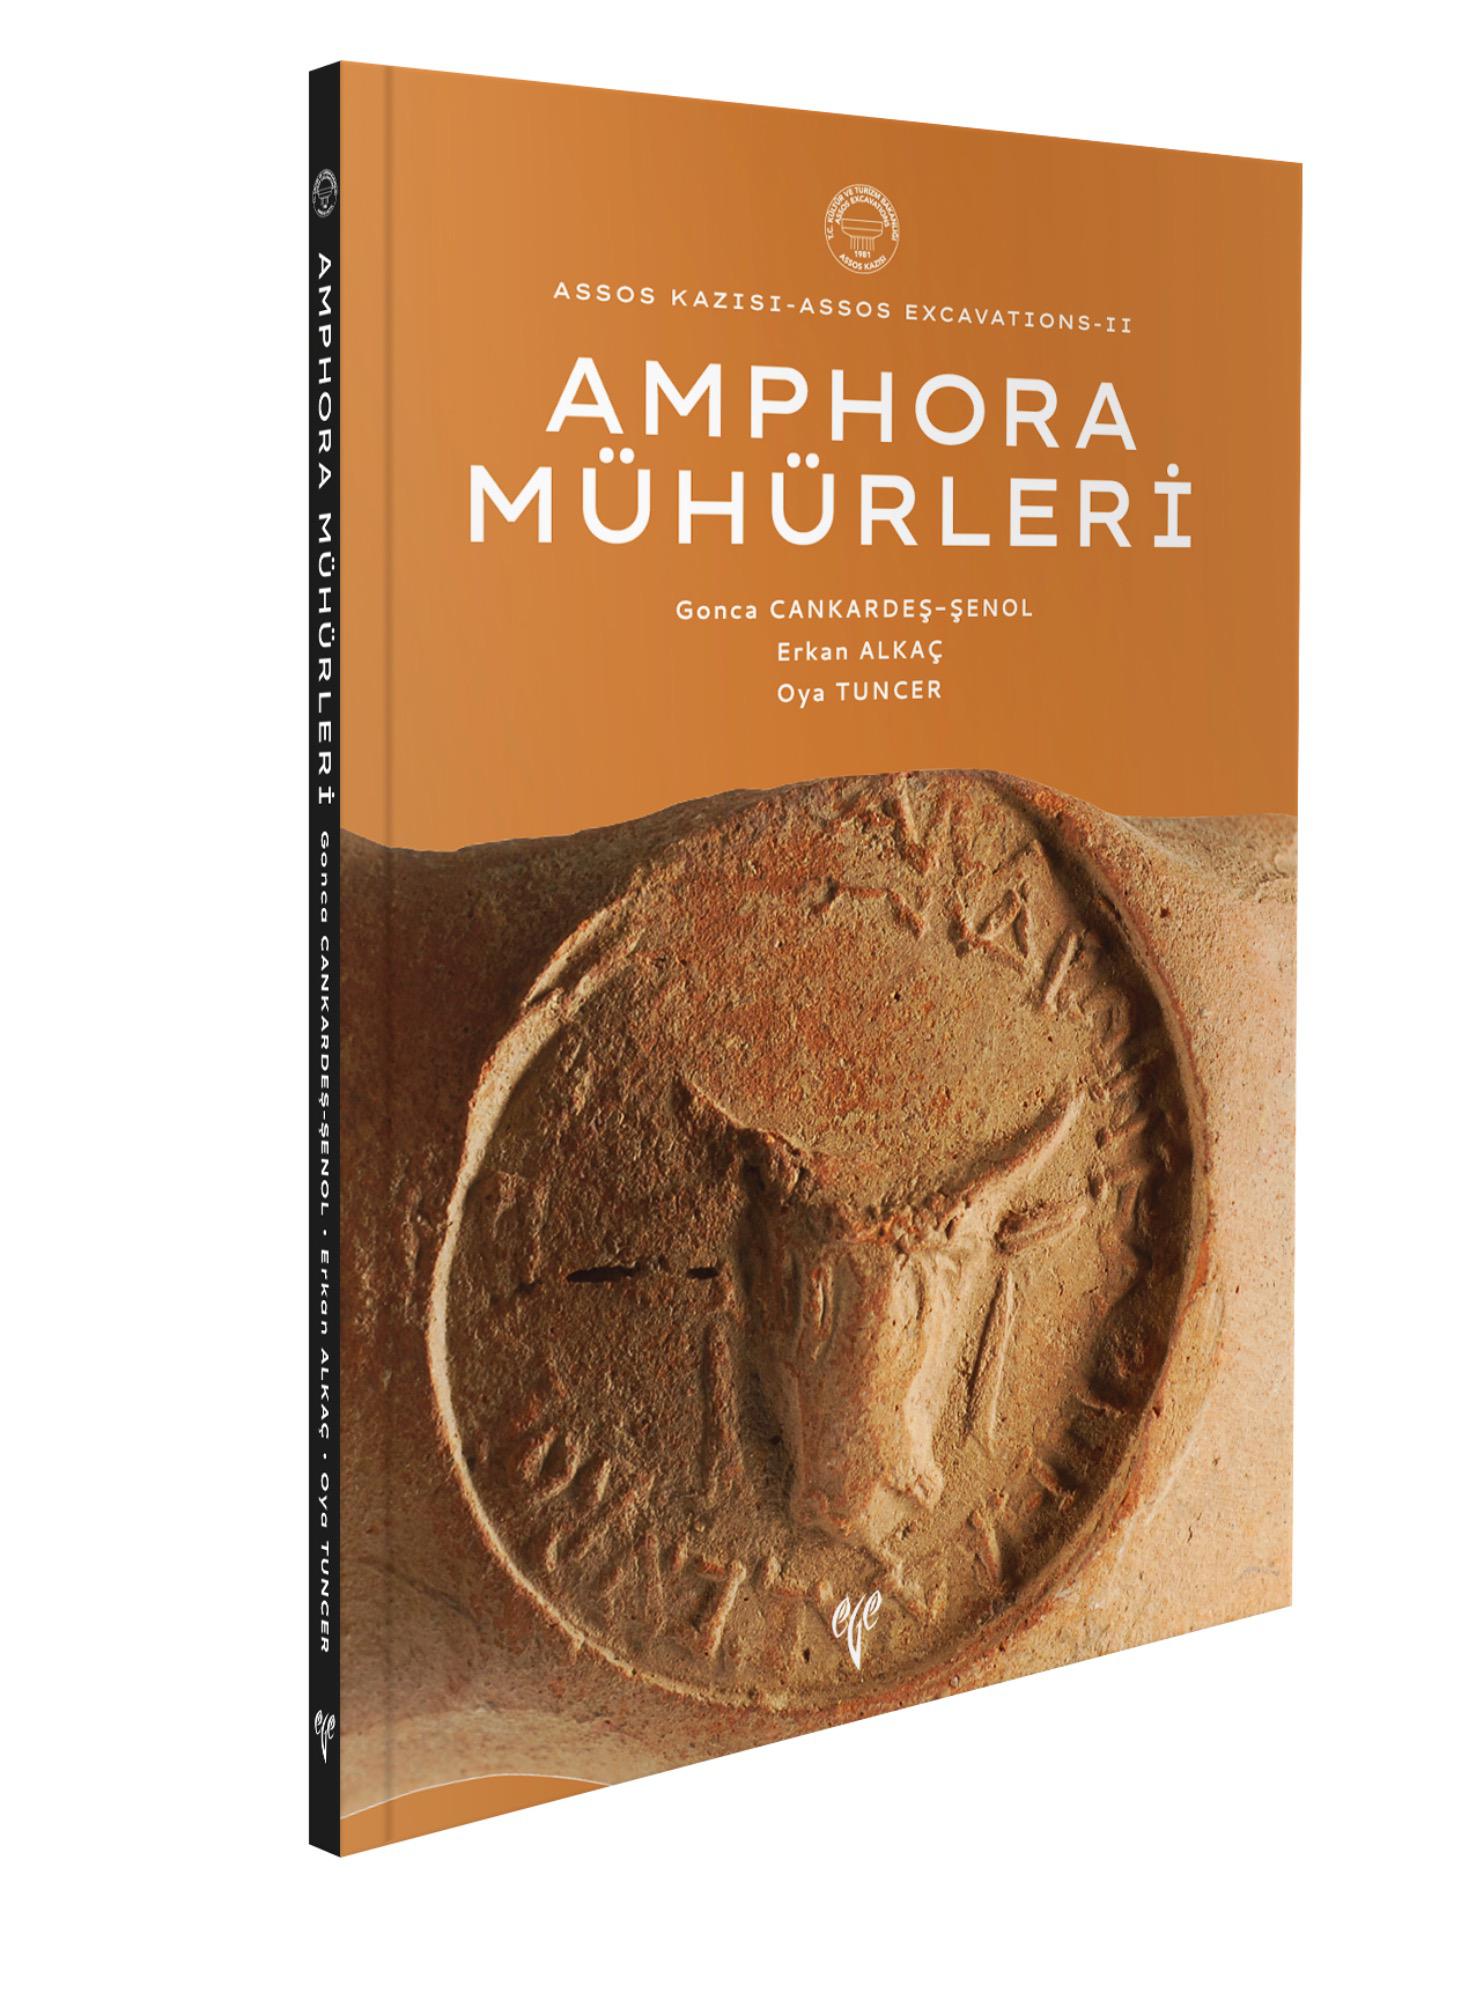 Cankardeş-Şenol, Gonca – Erkan Alkaç – Oya Tuncer : Amphora Mühürleri (Assos Excavations II)